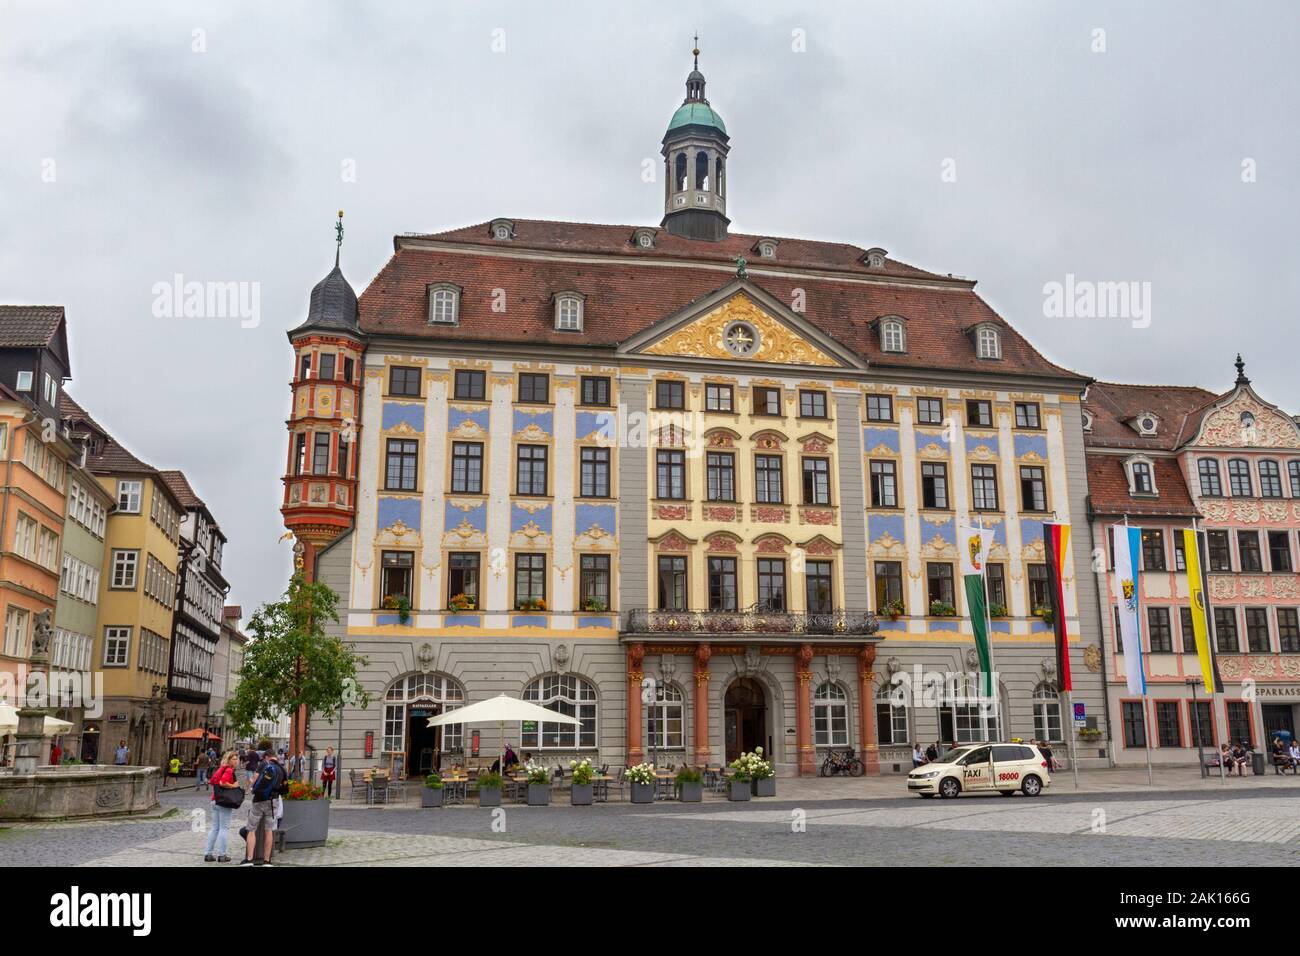 The Stadthaus (Town Hall) in Marktplatz, (Market Place), Coburg, Bavaria, Germany. Stock Photo